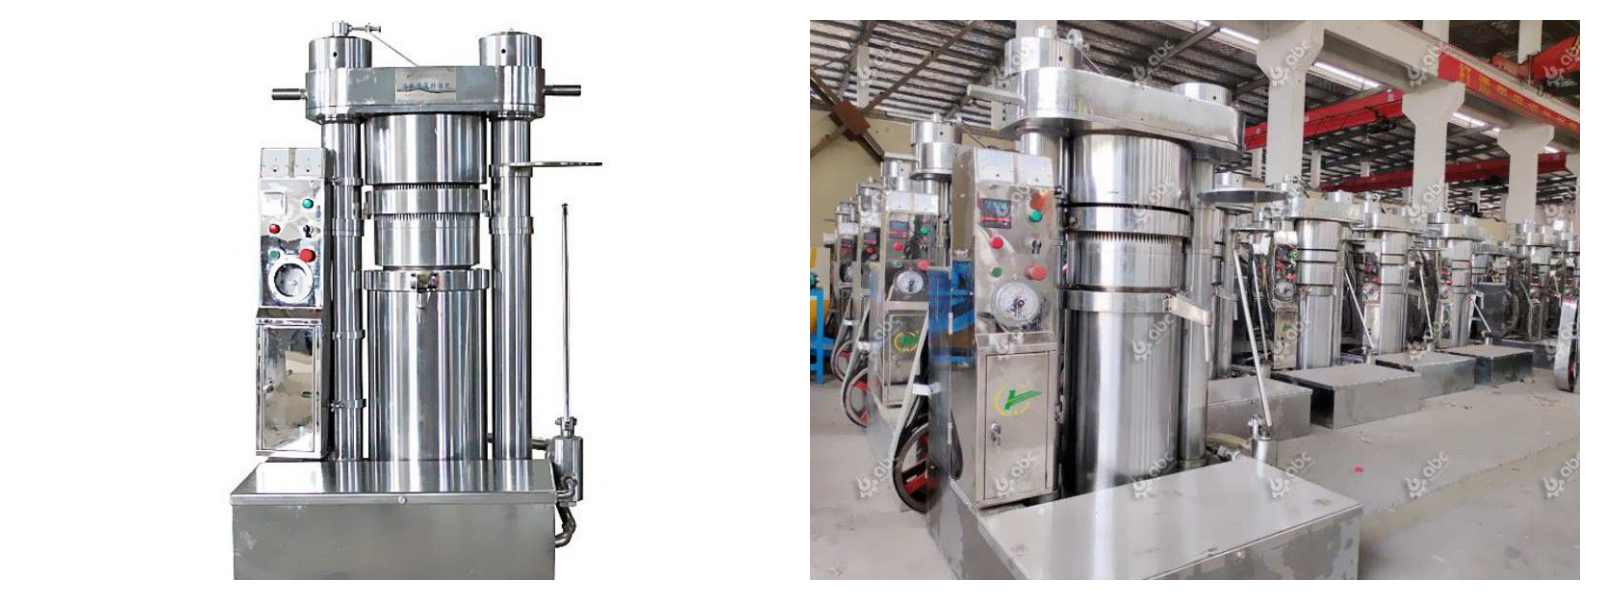 hydraulic cold press machine in plant for sale